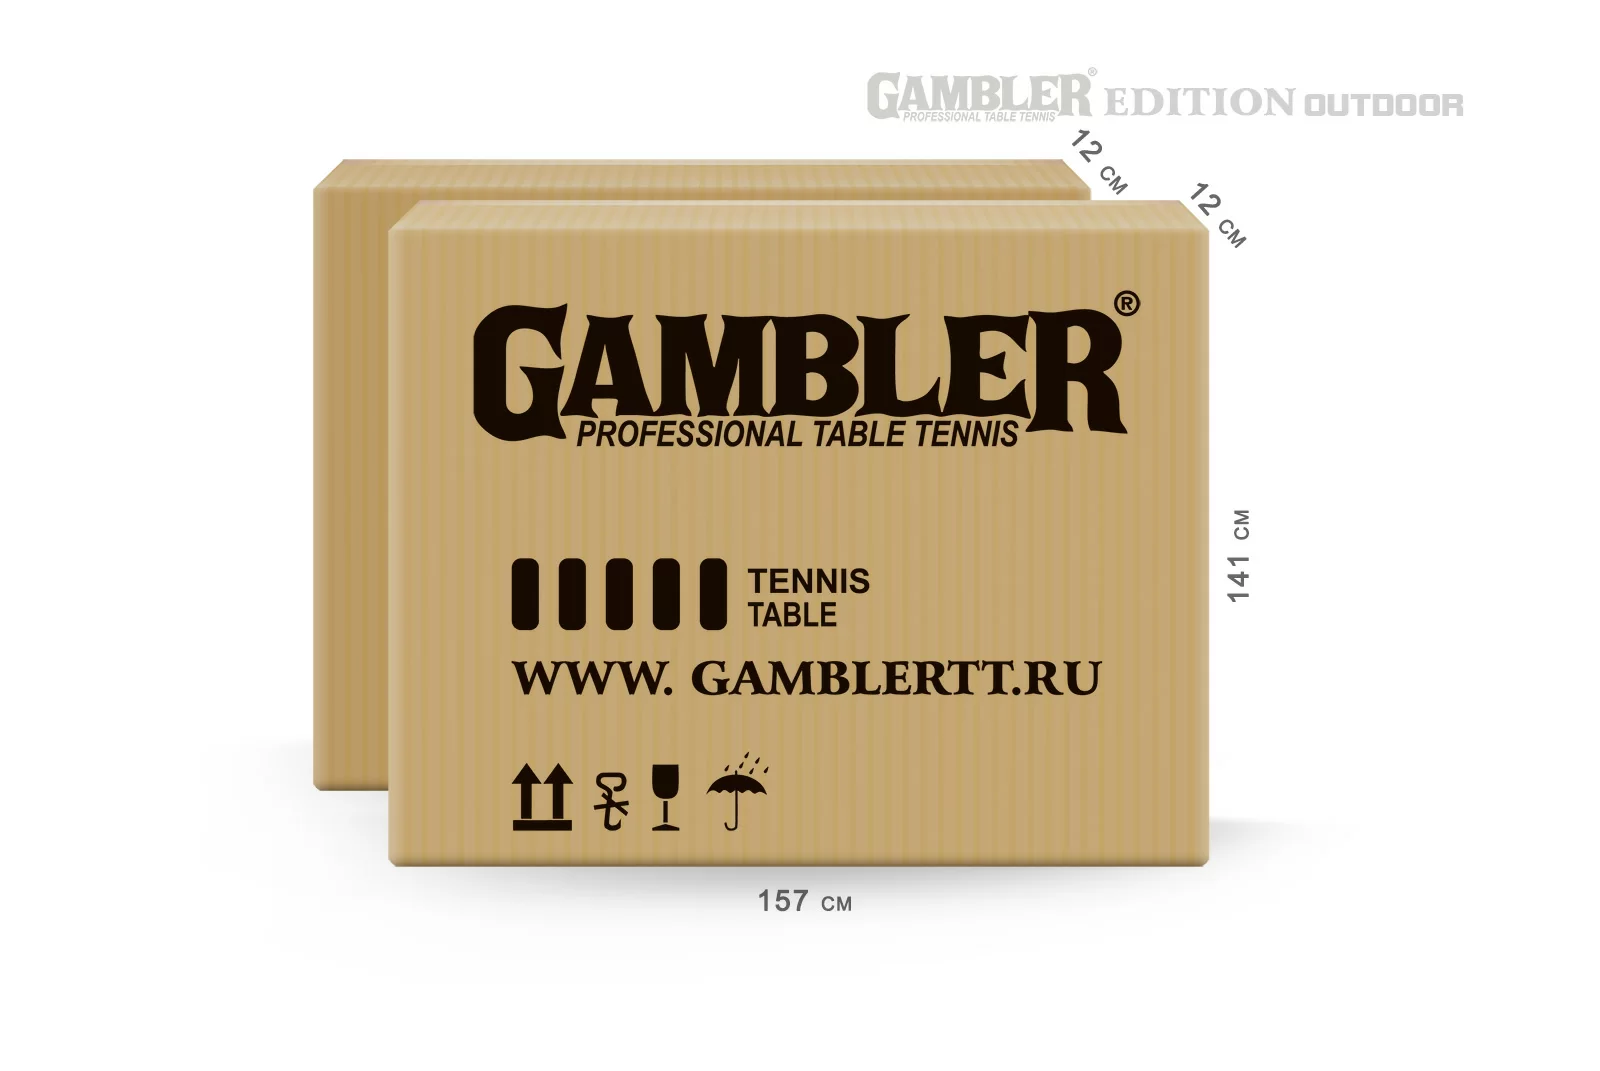 Фото GAMBLER Edition Outdoor BLUE со склада магазина СпортСЕ